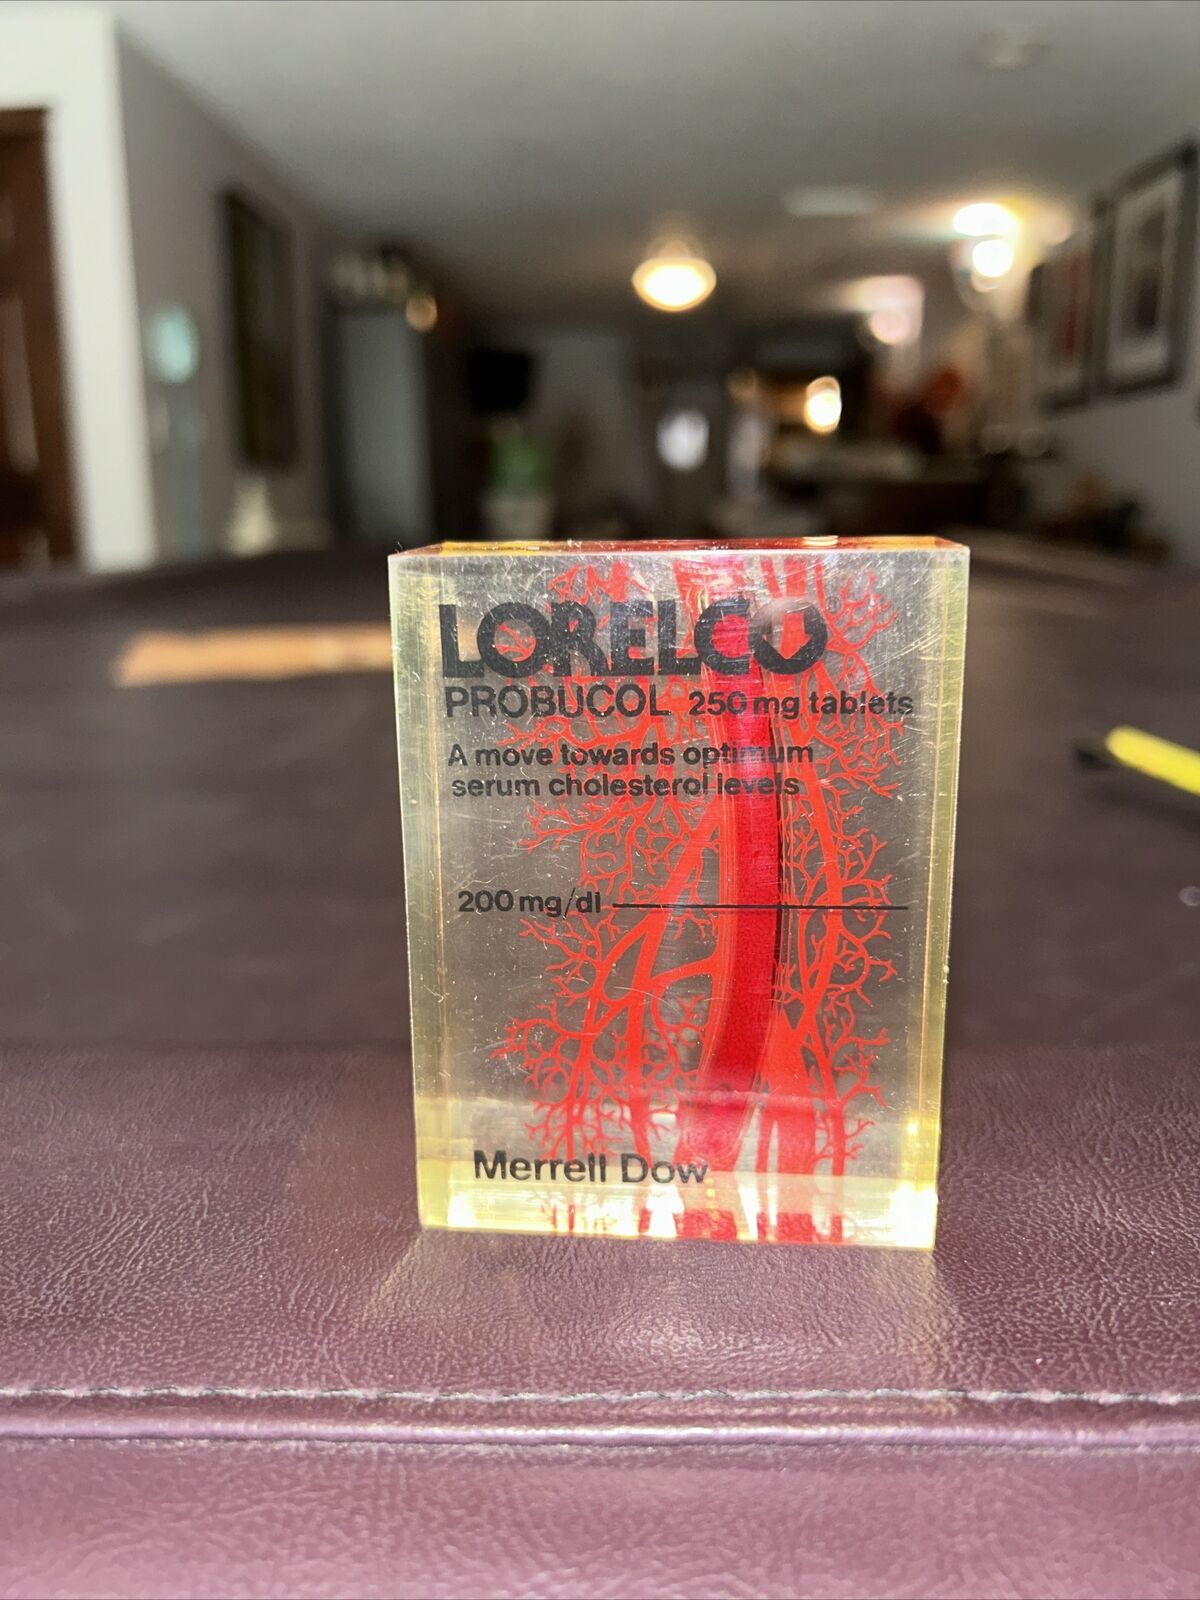 Acrylic Level Drug Advertising Premium Probucol Lorelco Cholesterol Medicine